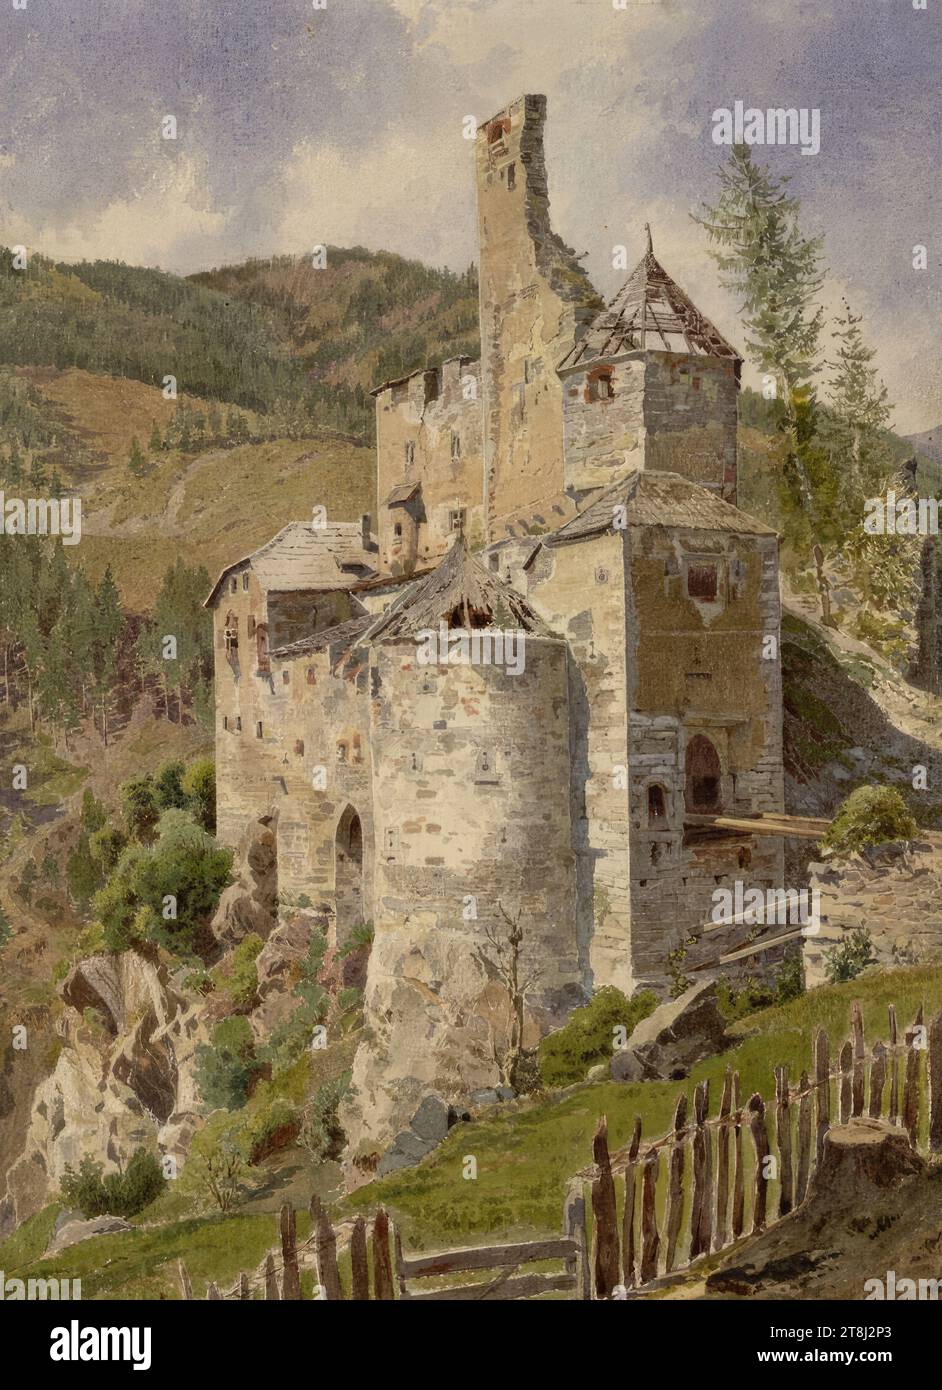 Schloss Taufers, Alois Ewald, Österreich, 1845 - 1889, 1881, Zeichnung, Aquarell, Bleistift; Inschrift: Pinsel in rot, nach Cahier: 36,5 x 26,4 cm, rechts. "29114 Stockfoto